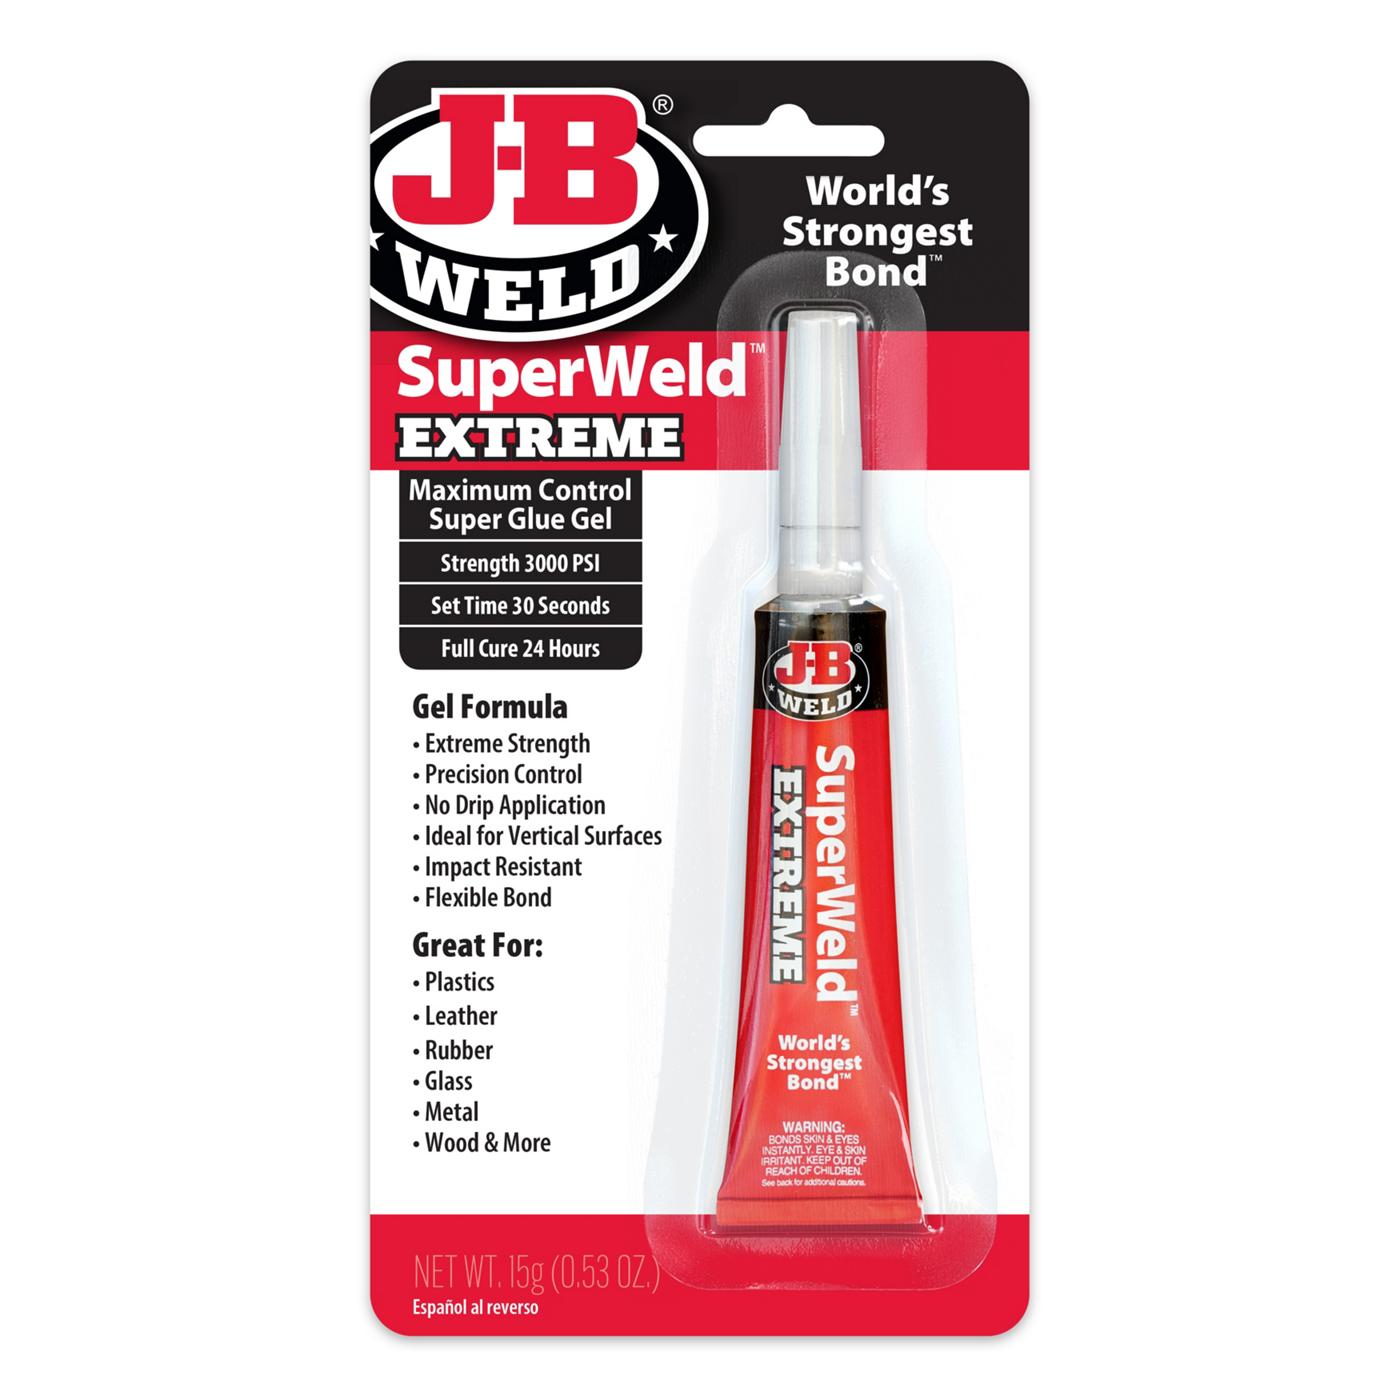 J-B Weld SuperWeld Extreme Maximum Control Super Glue Gel; image 1 of 2